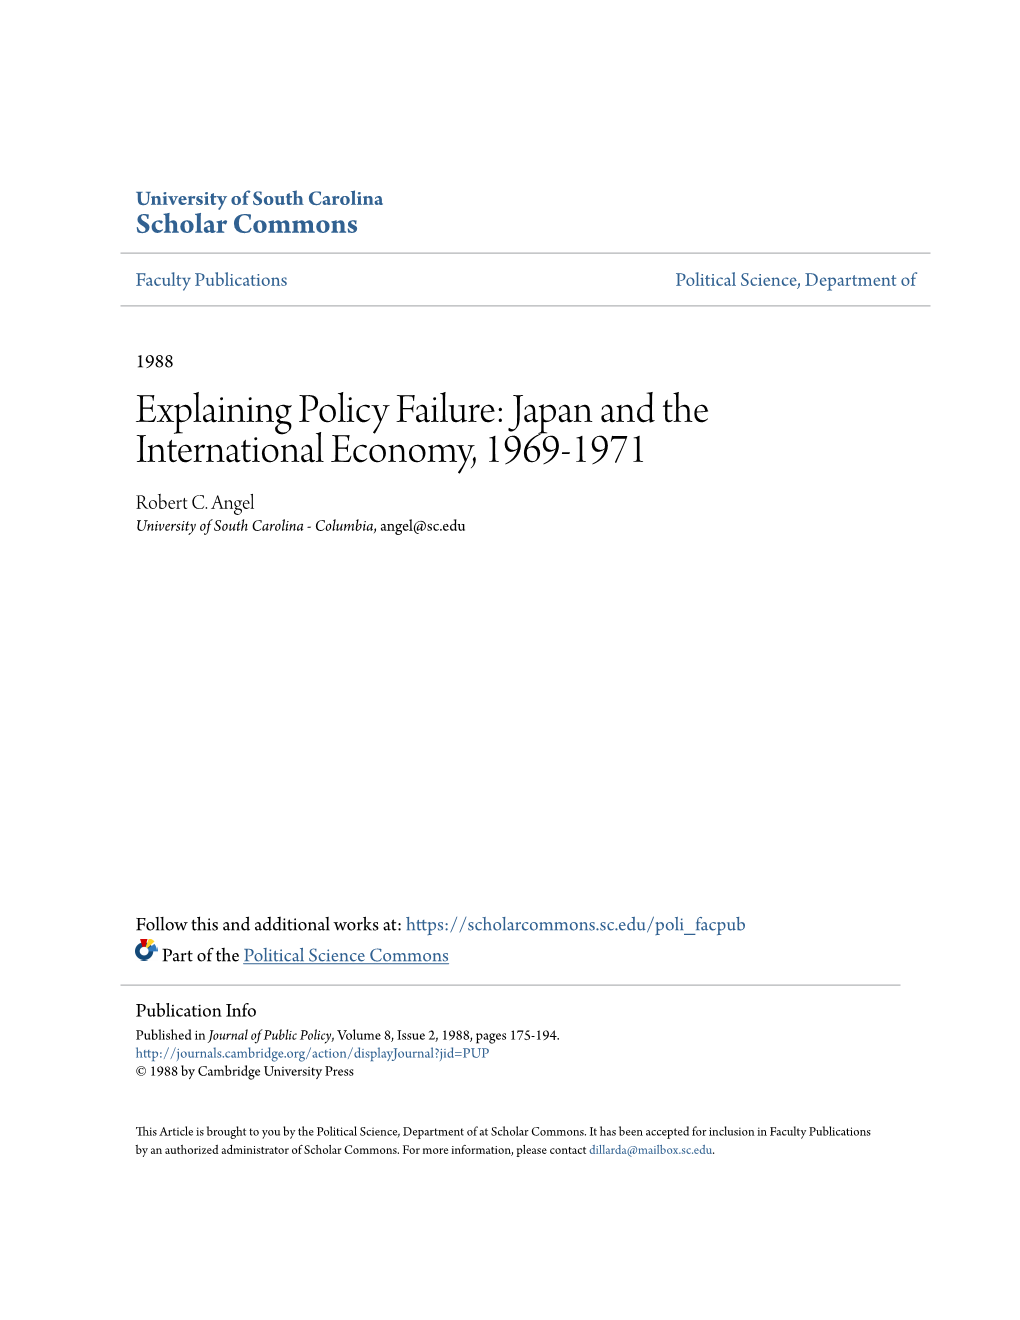 Explaining Policy Failure: Japan and the International Economy, 1969-1971 Robert C